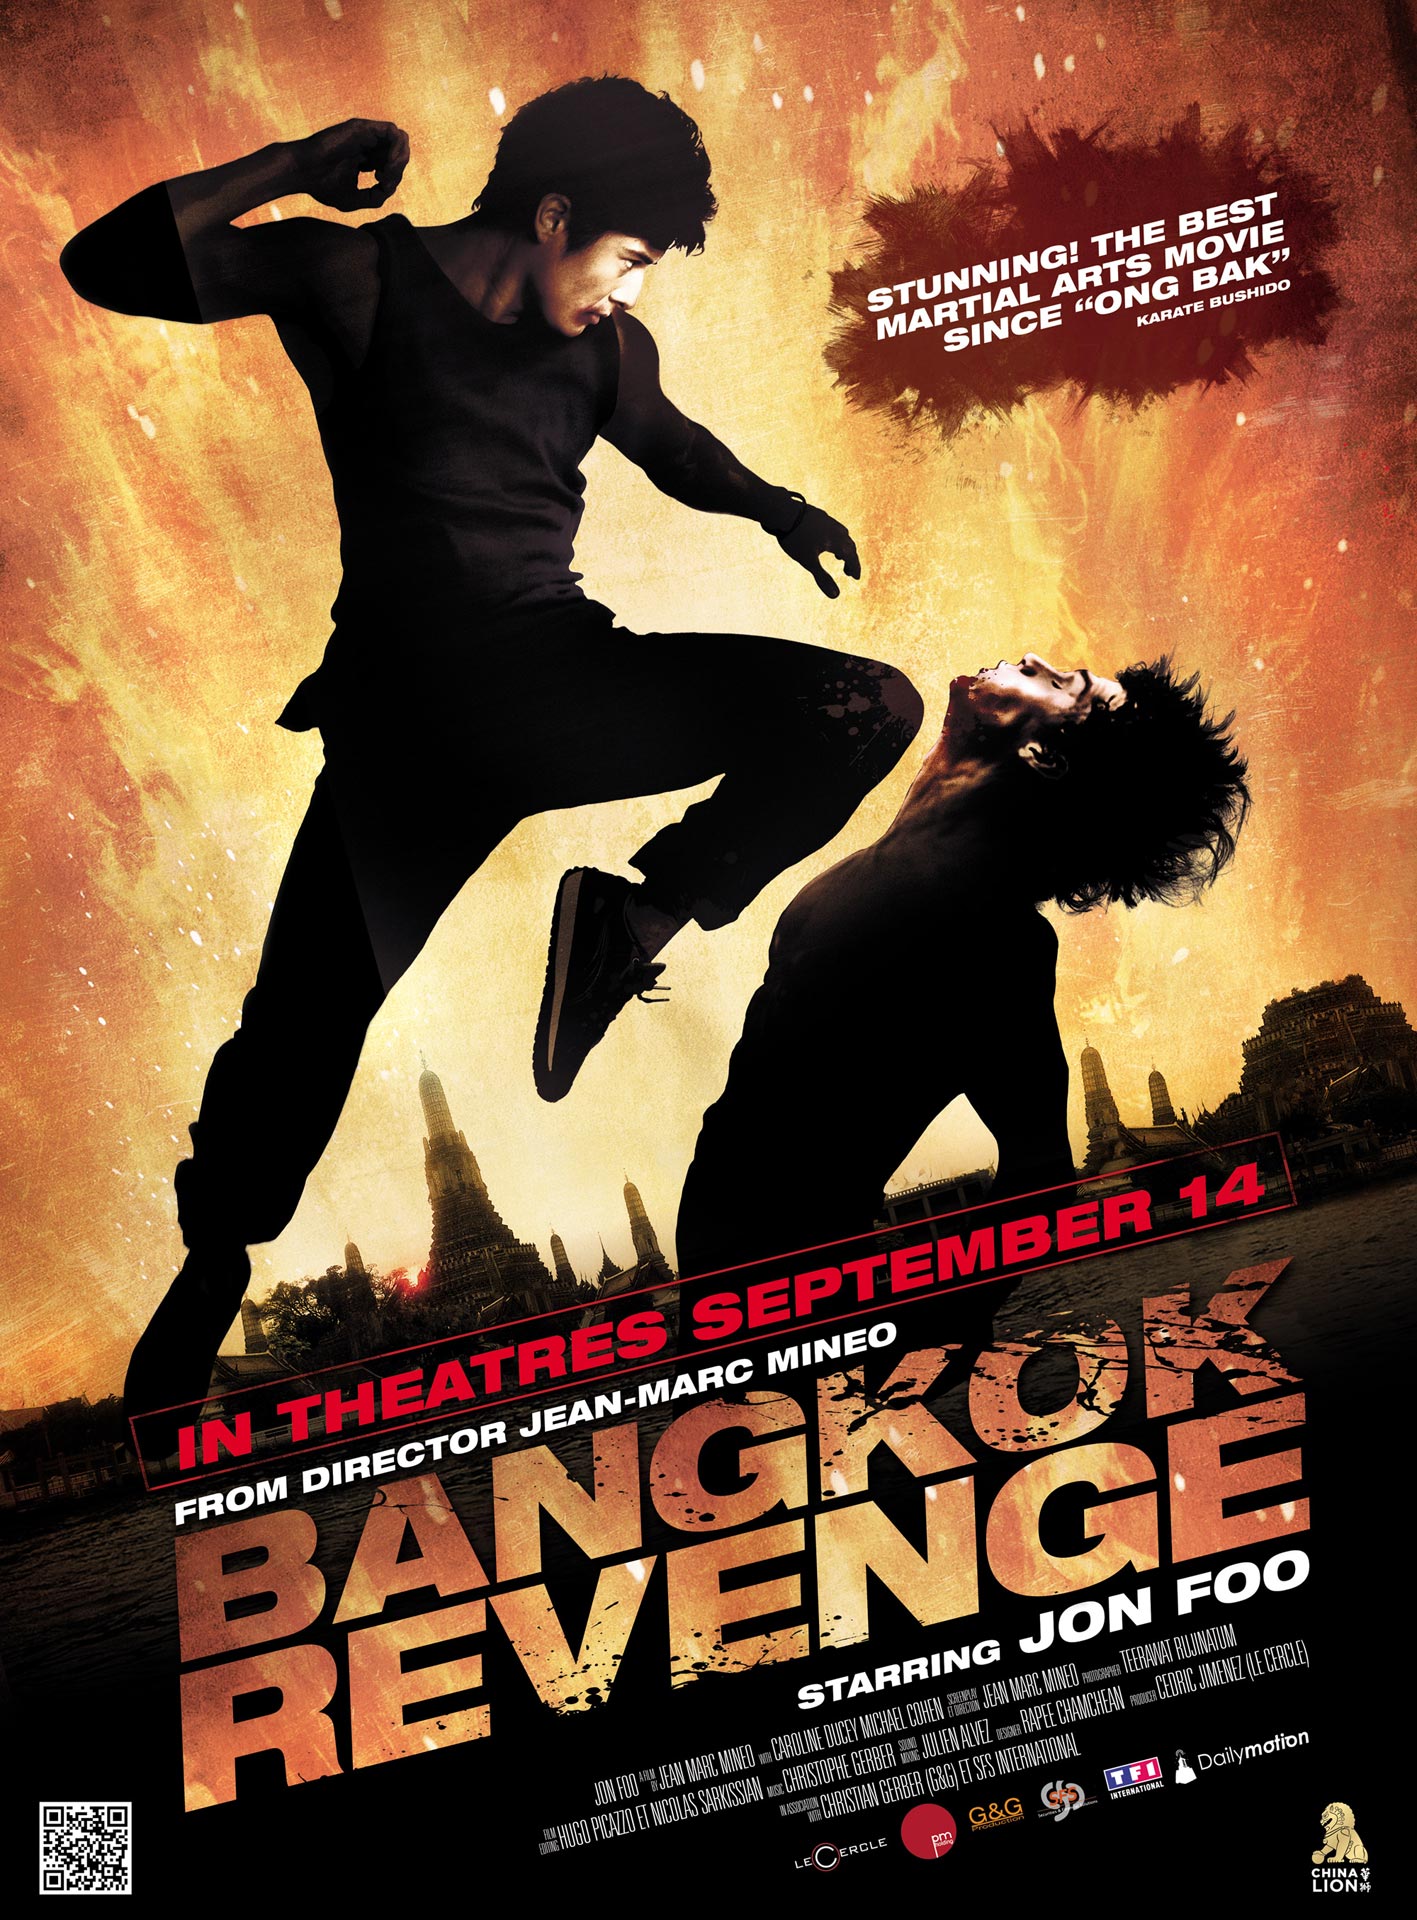 Bangkok Revenge (aka Rebirth) with Jon Foo!